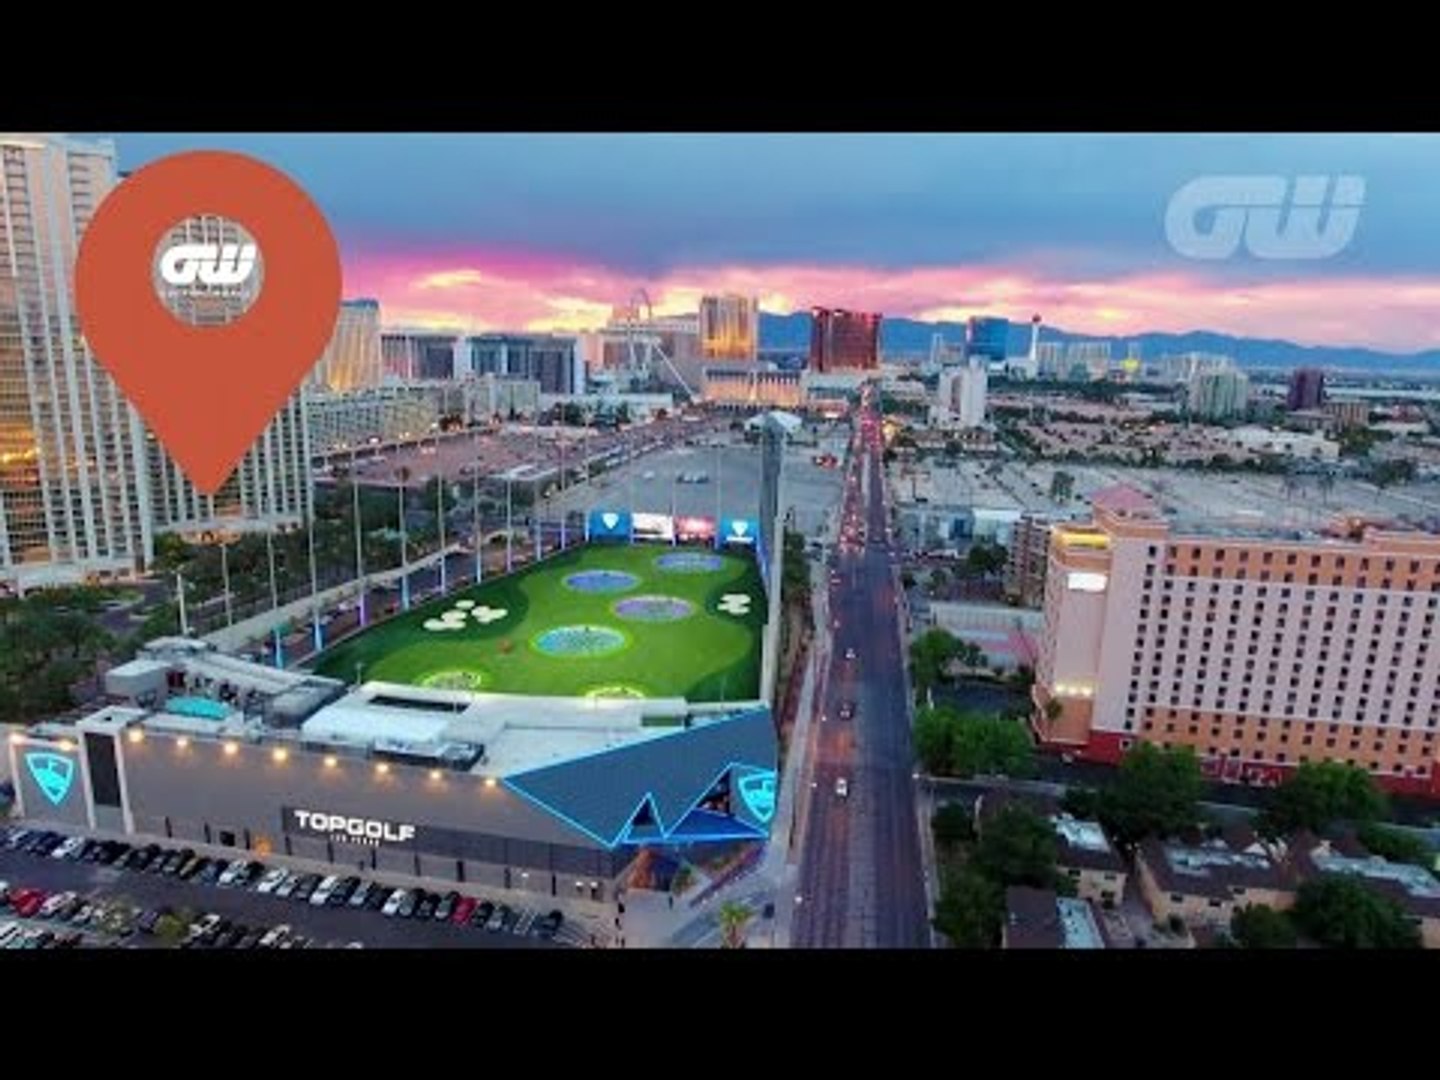 Destination: Topgolf Las Vegas - video Dailymotion